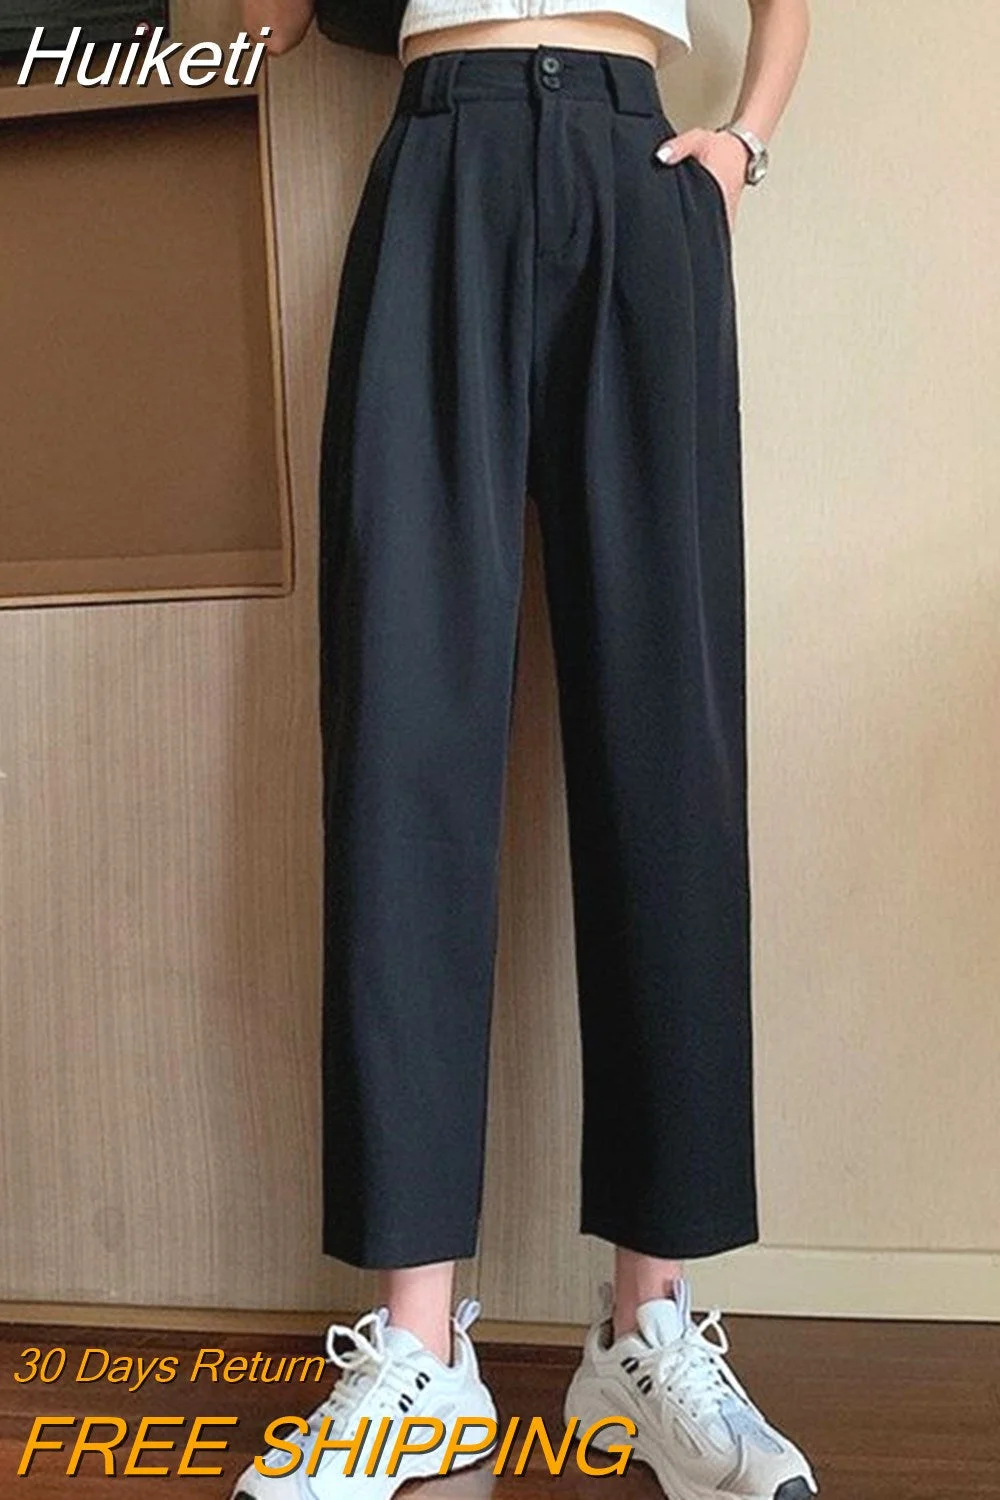 Huiketi Black Pants Fashion Single Breasted Korean Style Women Ankle-Length Pants Casual Pockets Slim Office Ladies Pants 5XL New